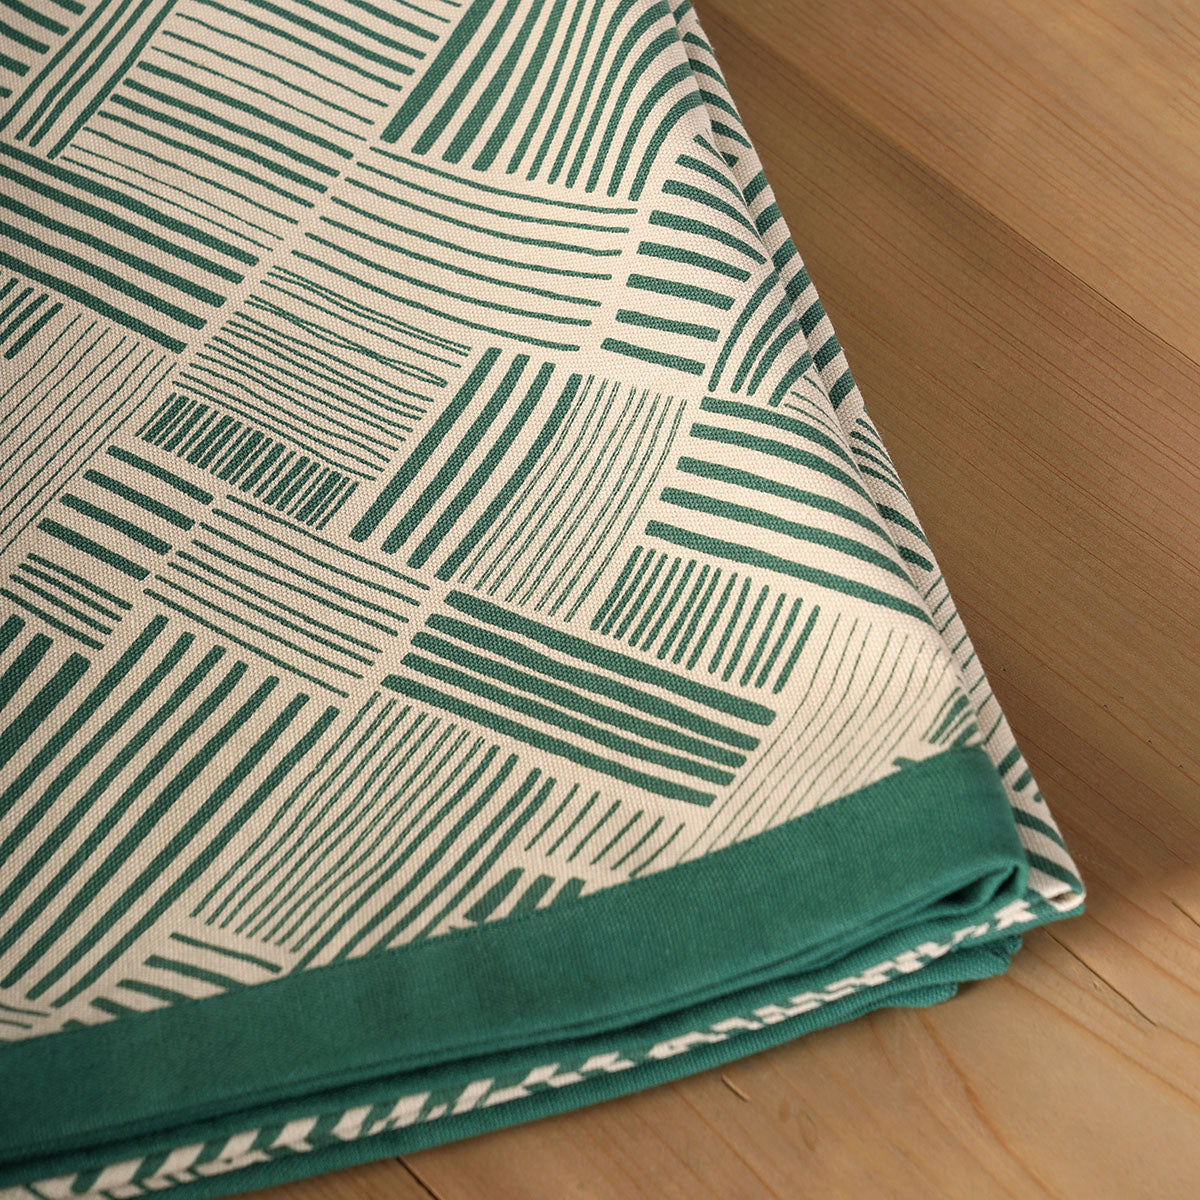 MODERN RETRO - Aqua Green cotton table cloth with geometrical stripe print, Sizes available